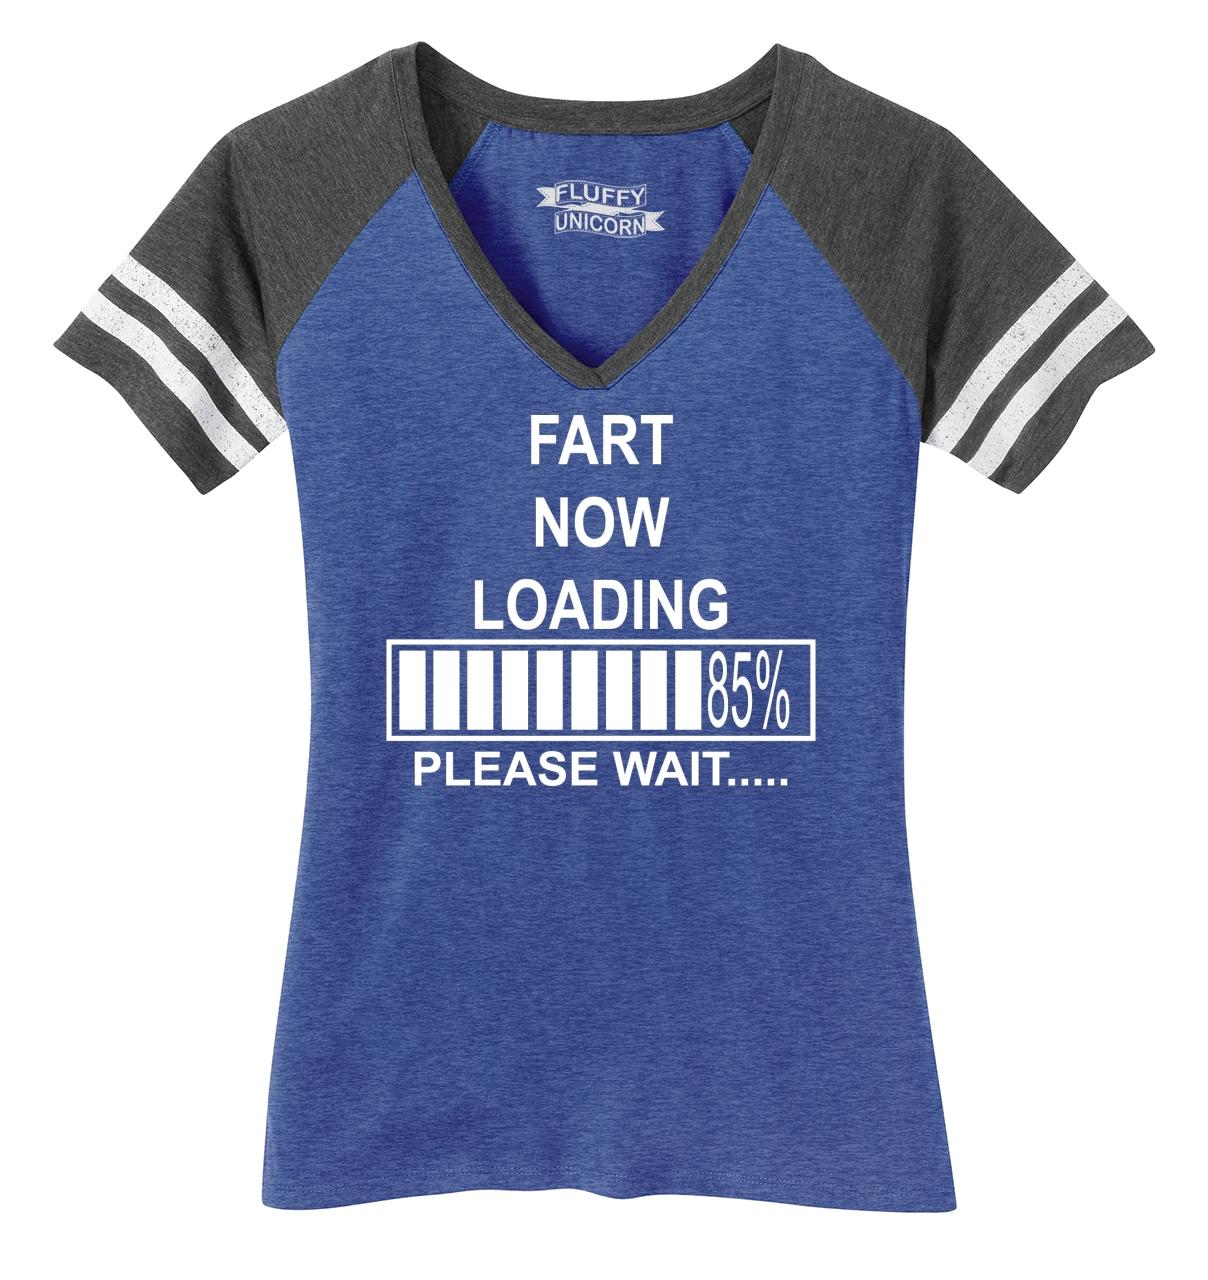 Ladies Fart Now Loading Funny Tech Geek Poop Humor Shirt Game V Neck Tee Gas Ebay